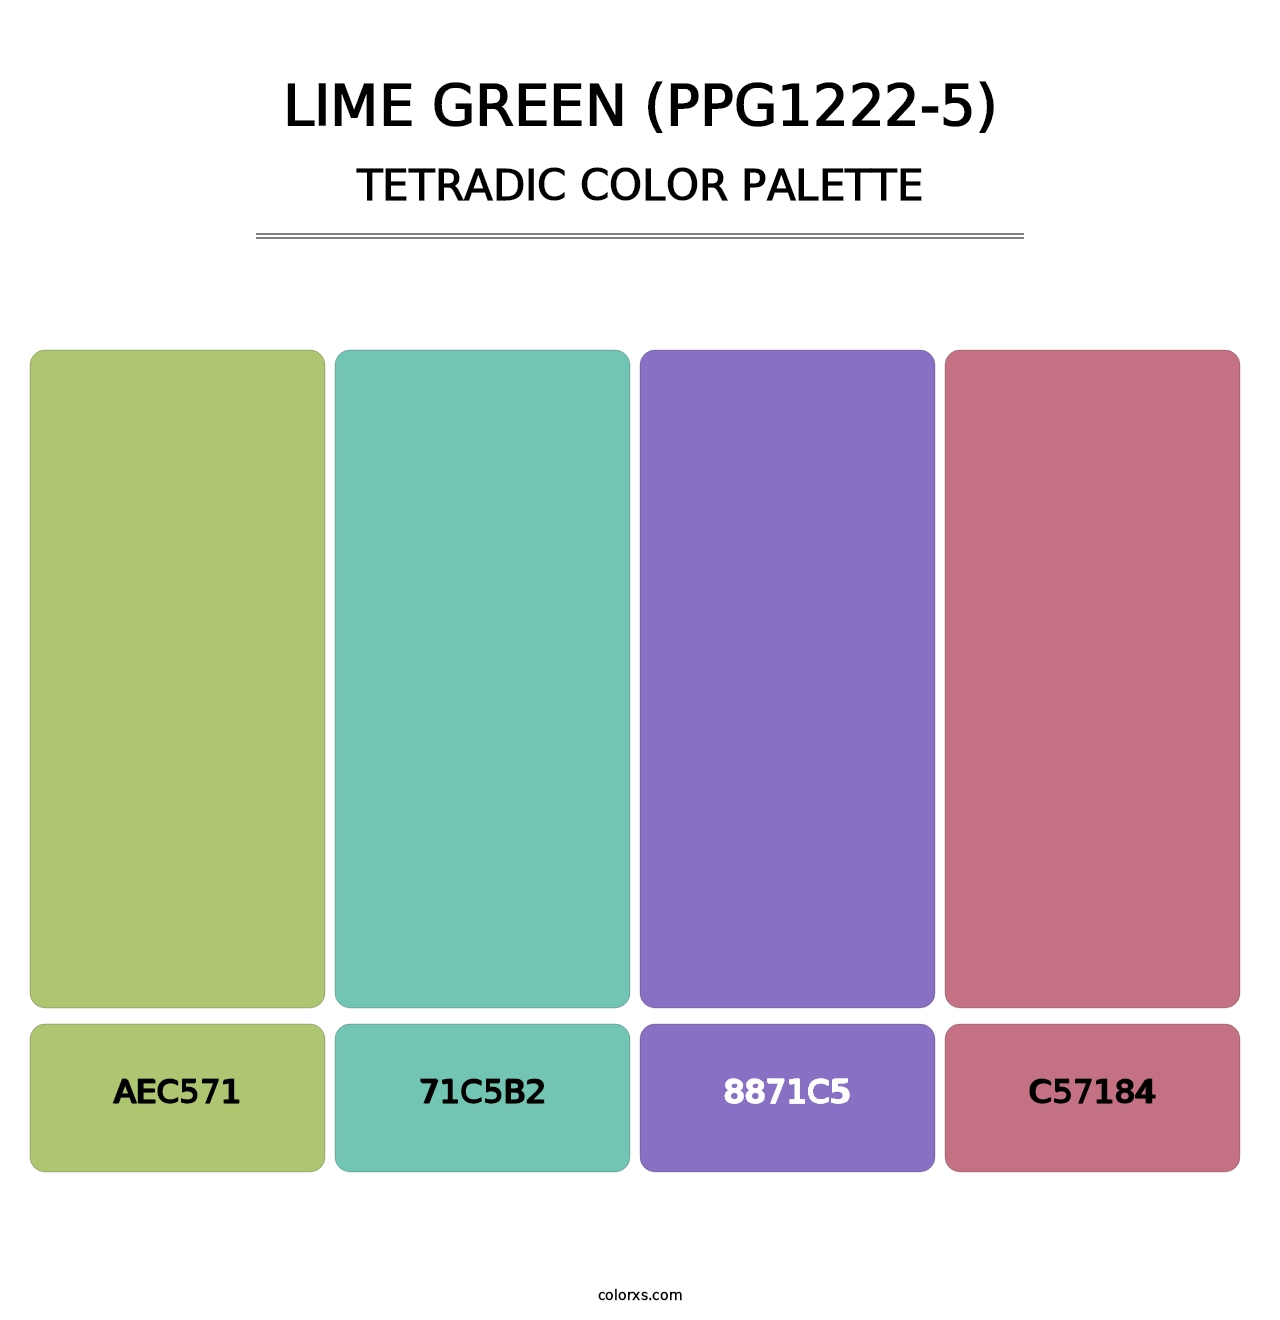 Lime Green (PPG1222-5) - Tetradic Color Palette